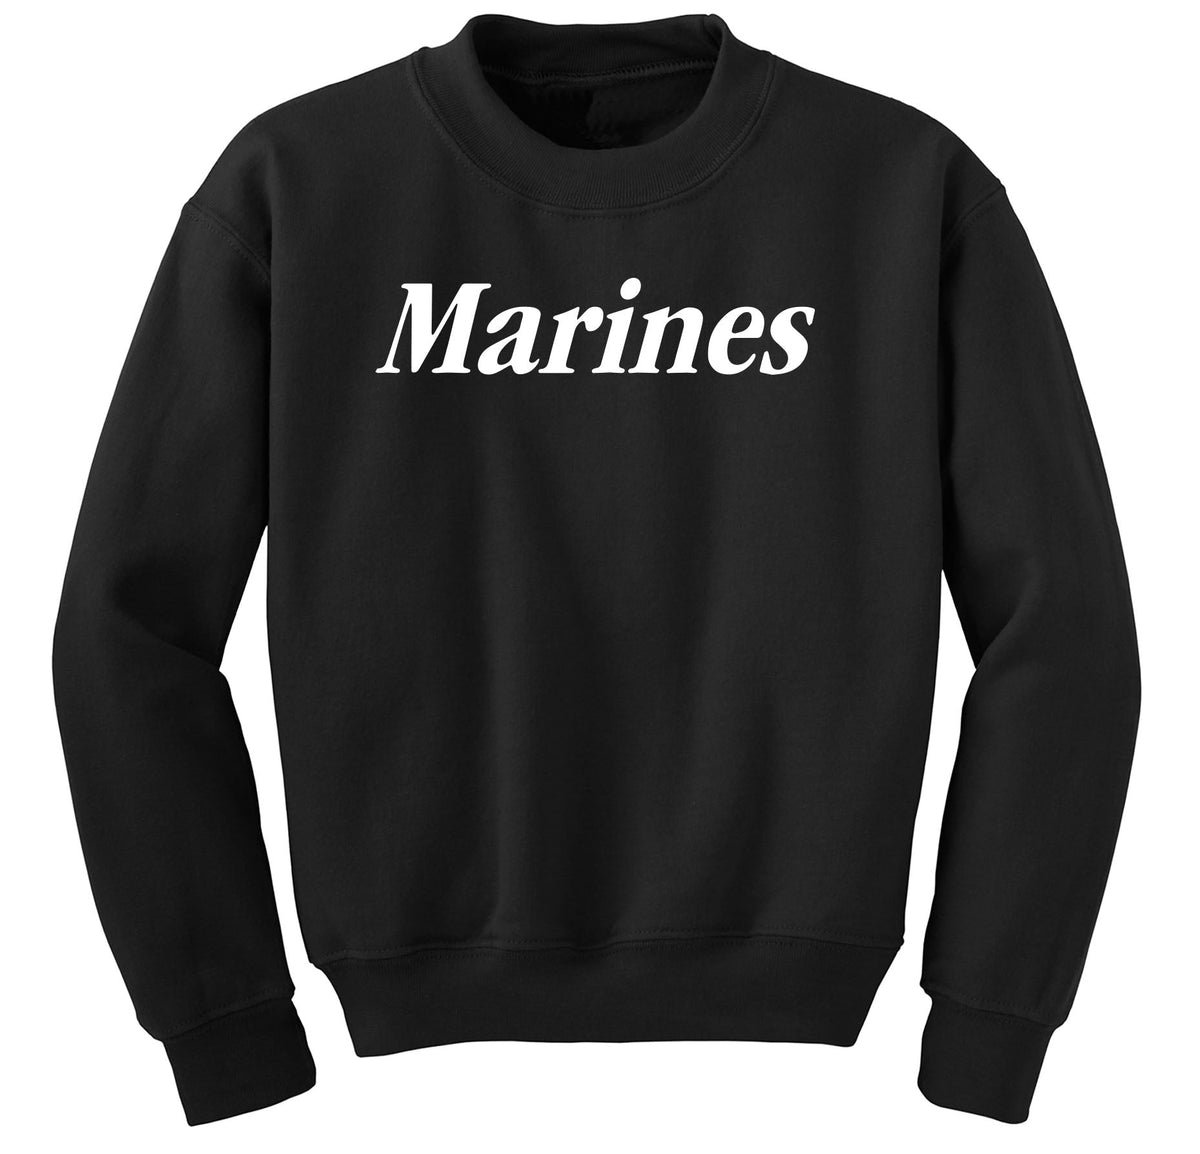 Closeout Black White Marines Sweatshirt